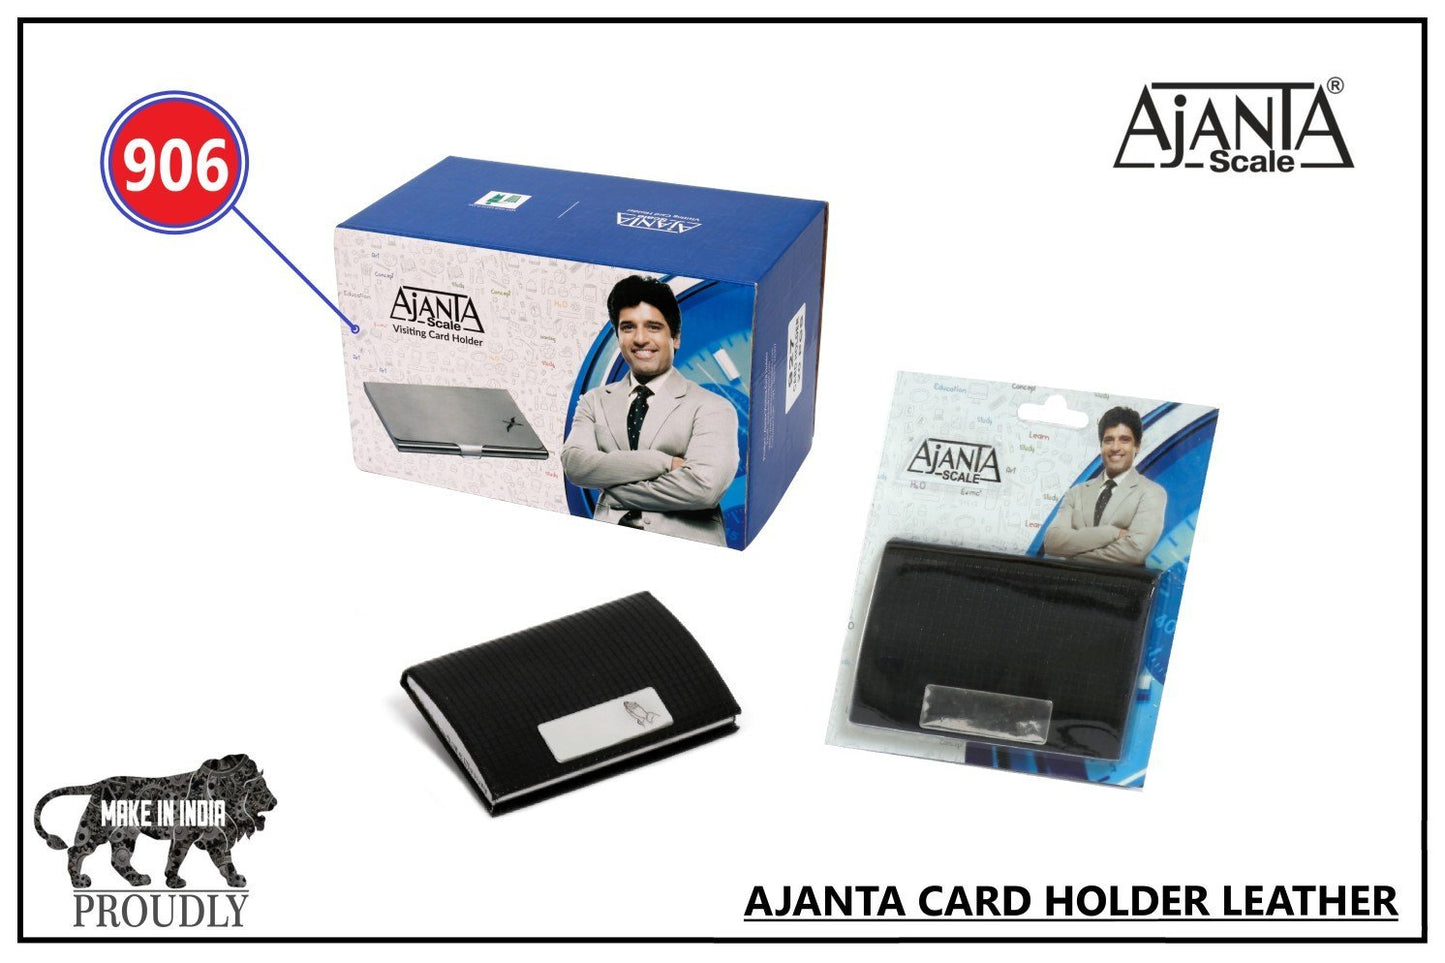 Ajanta Card Holder 906 (1 Pcs.) Credit Card Holder Debit Card Holder Business Card Holder Visiting Card Holder Visiting Card Case Black Card Holder Leather Card Holder ATM Card Holder Magnetic Closure